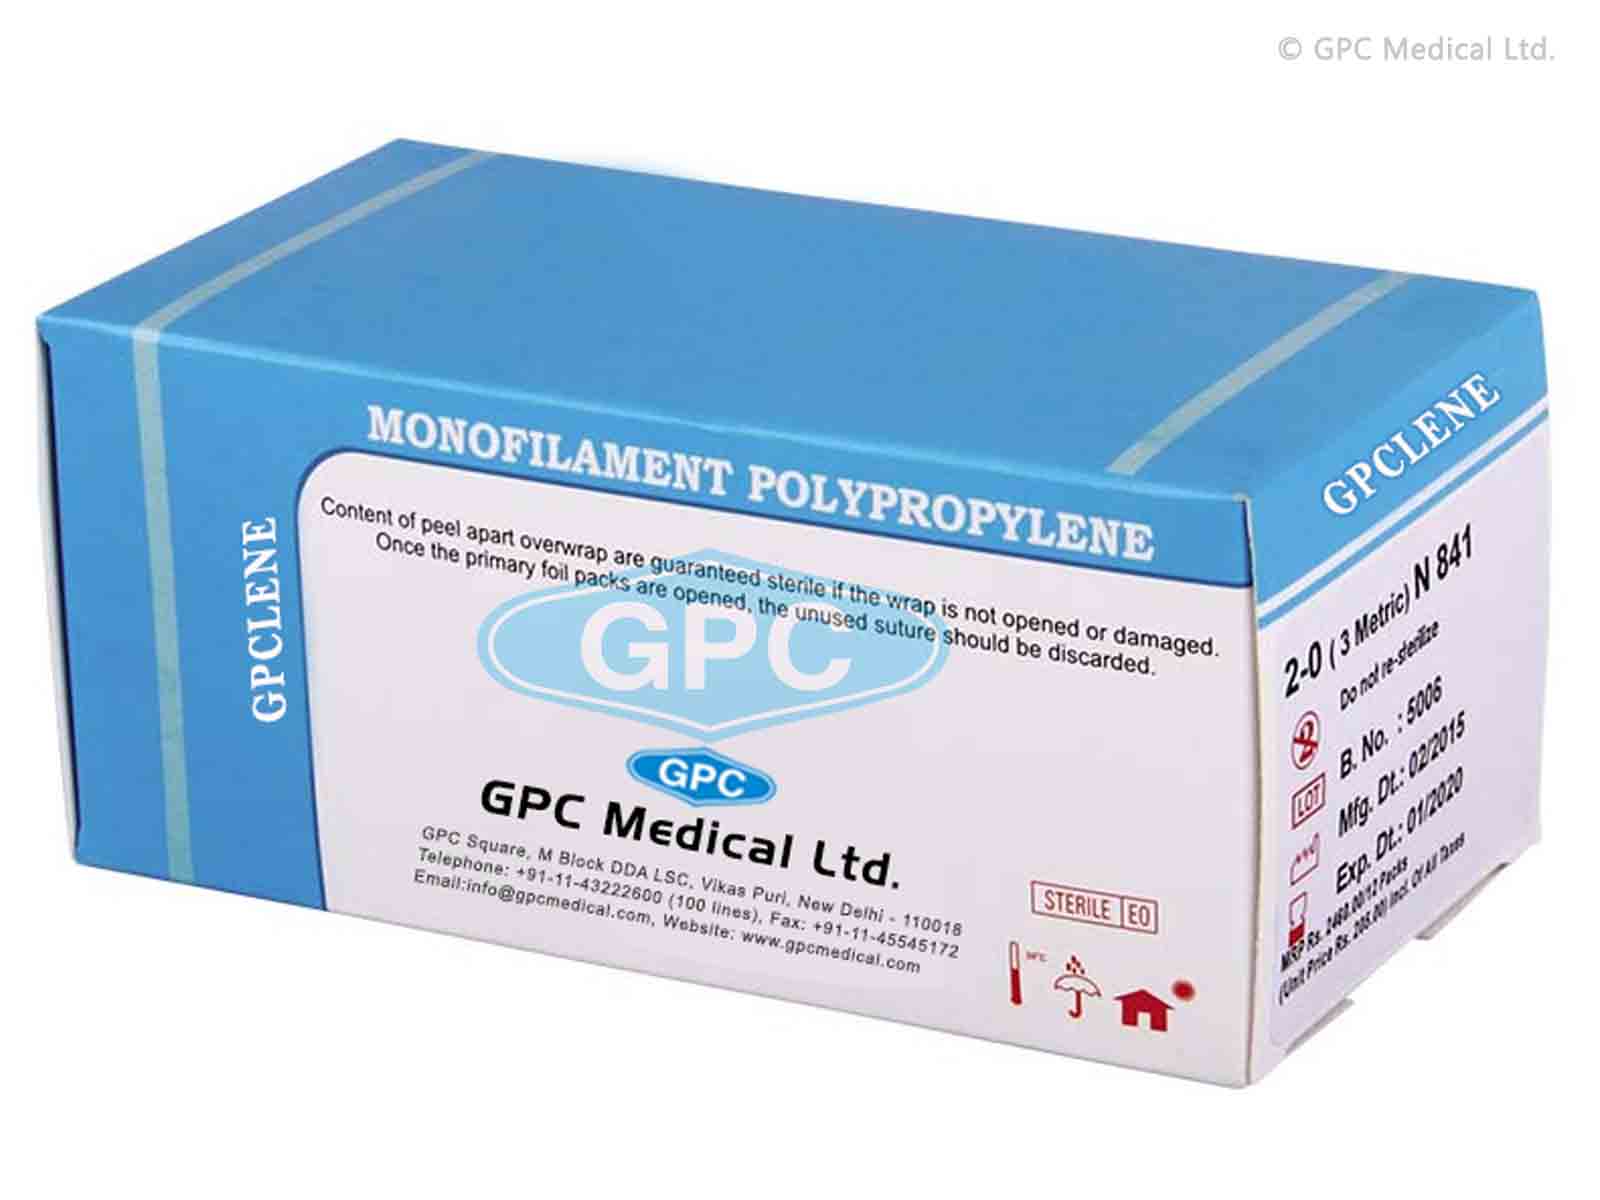 GPCLENE - Monofilament Polypropylene